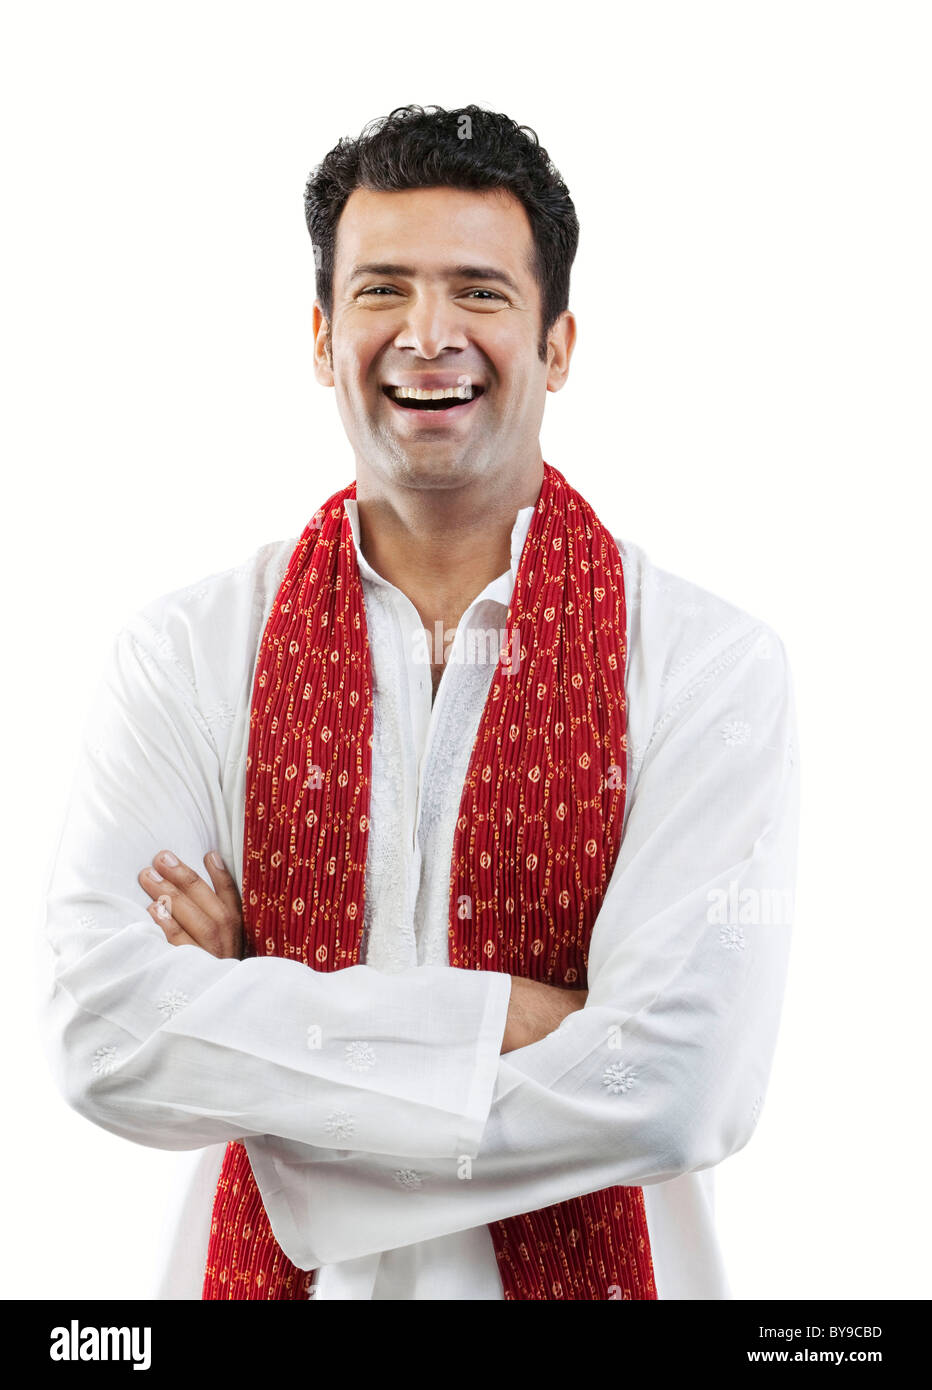 Portrait of a Gujarati man smiling Stock Photo